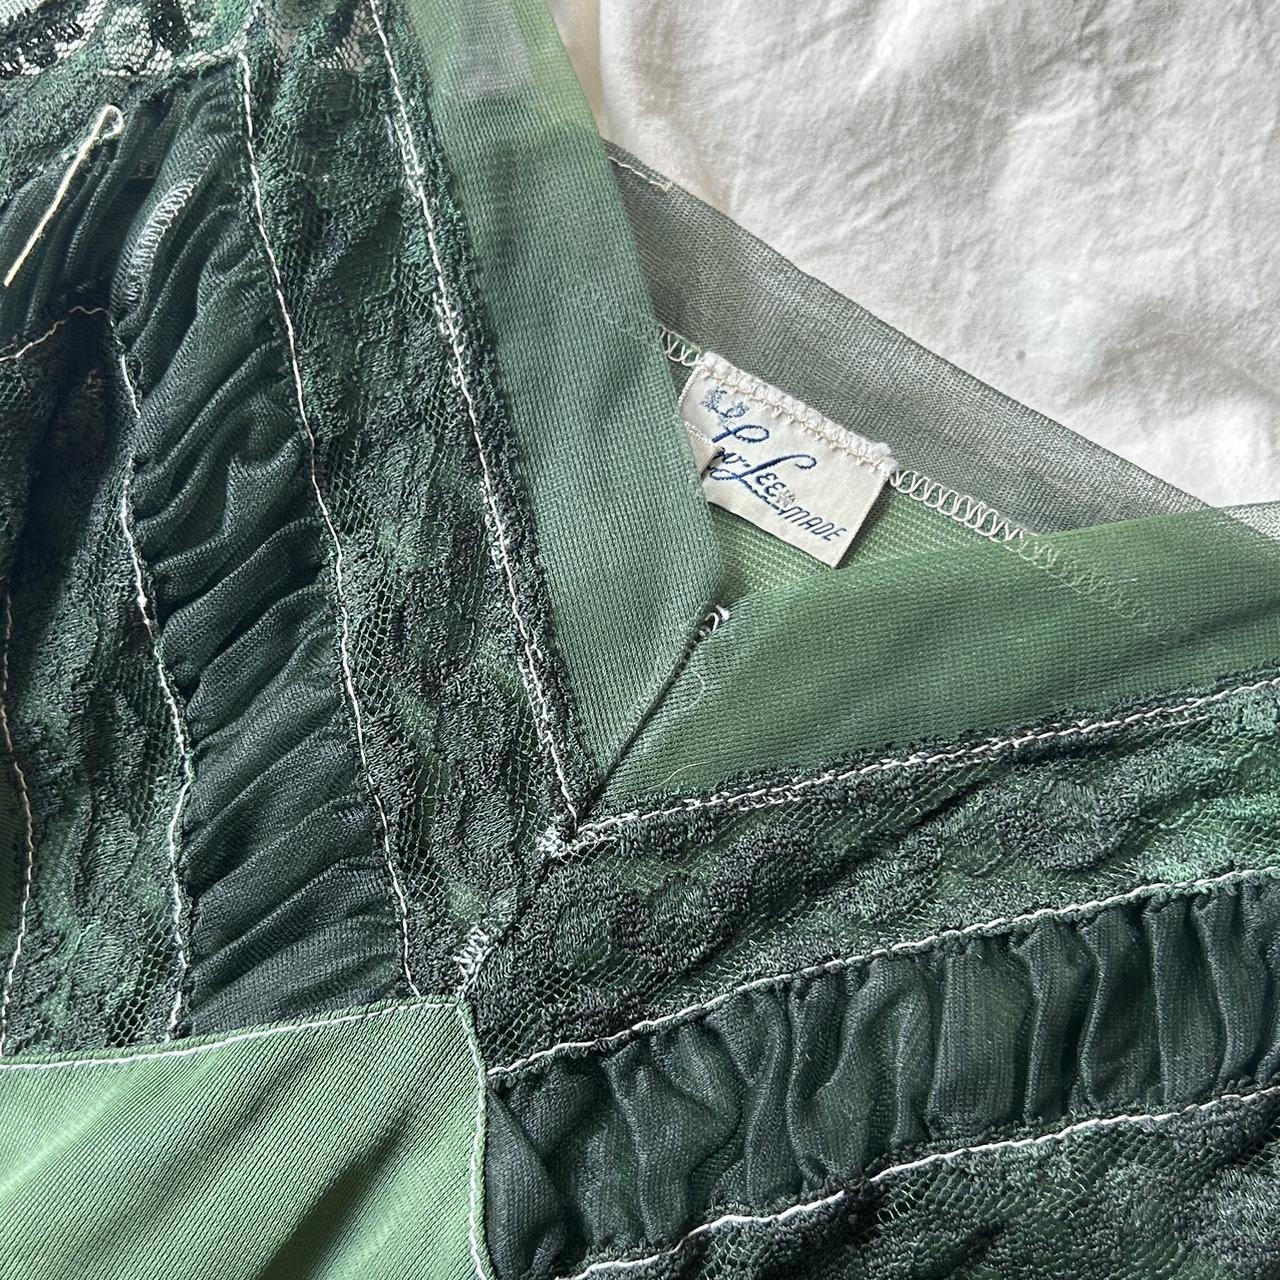 Hand dyed vintage silk slip dress 🍉 Fits like a... - Depop